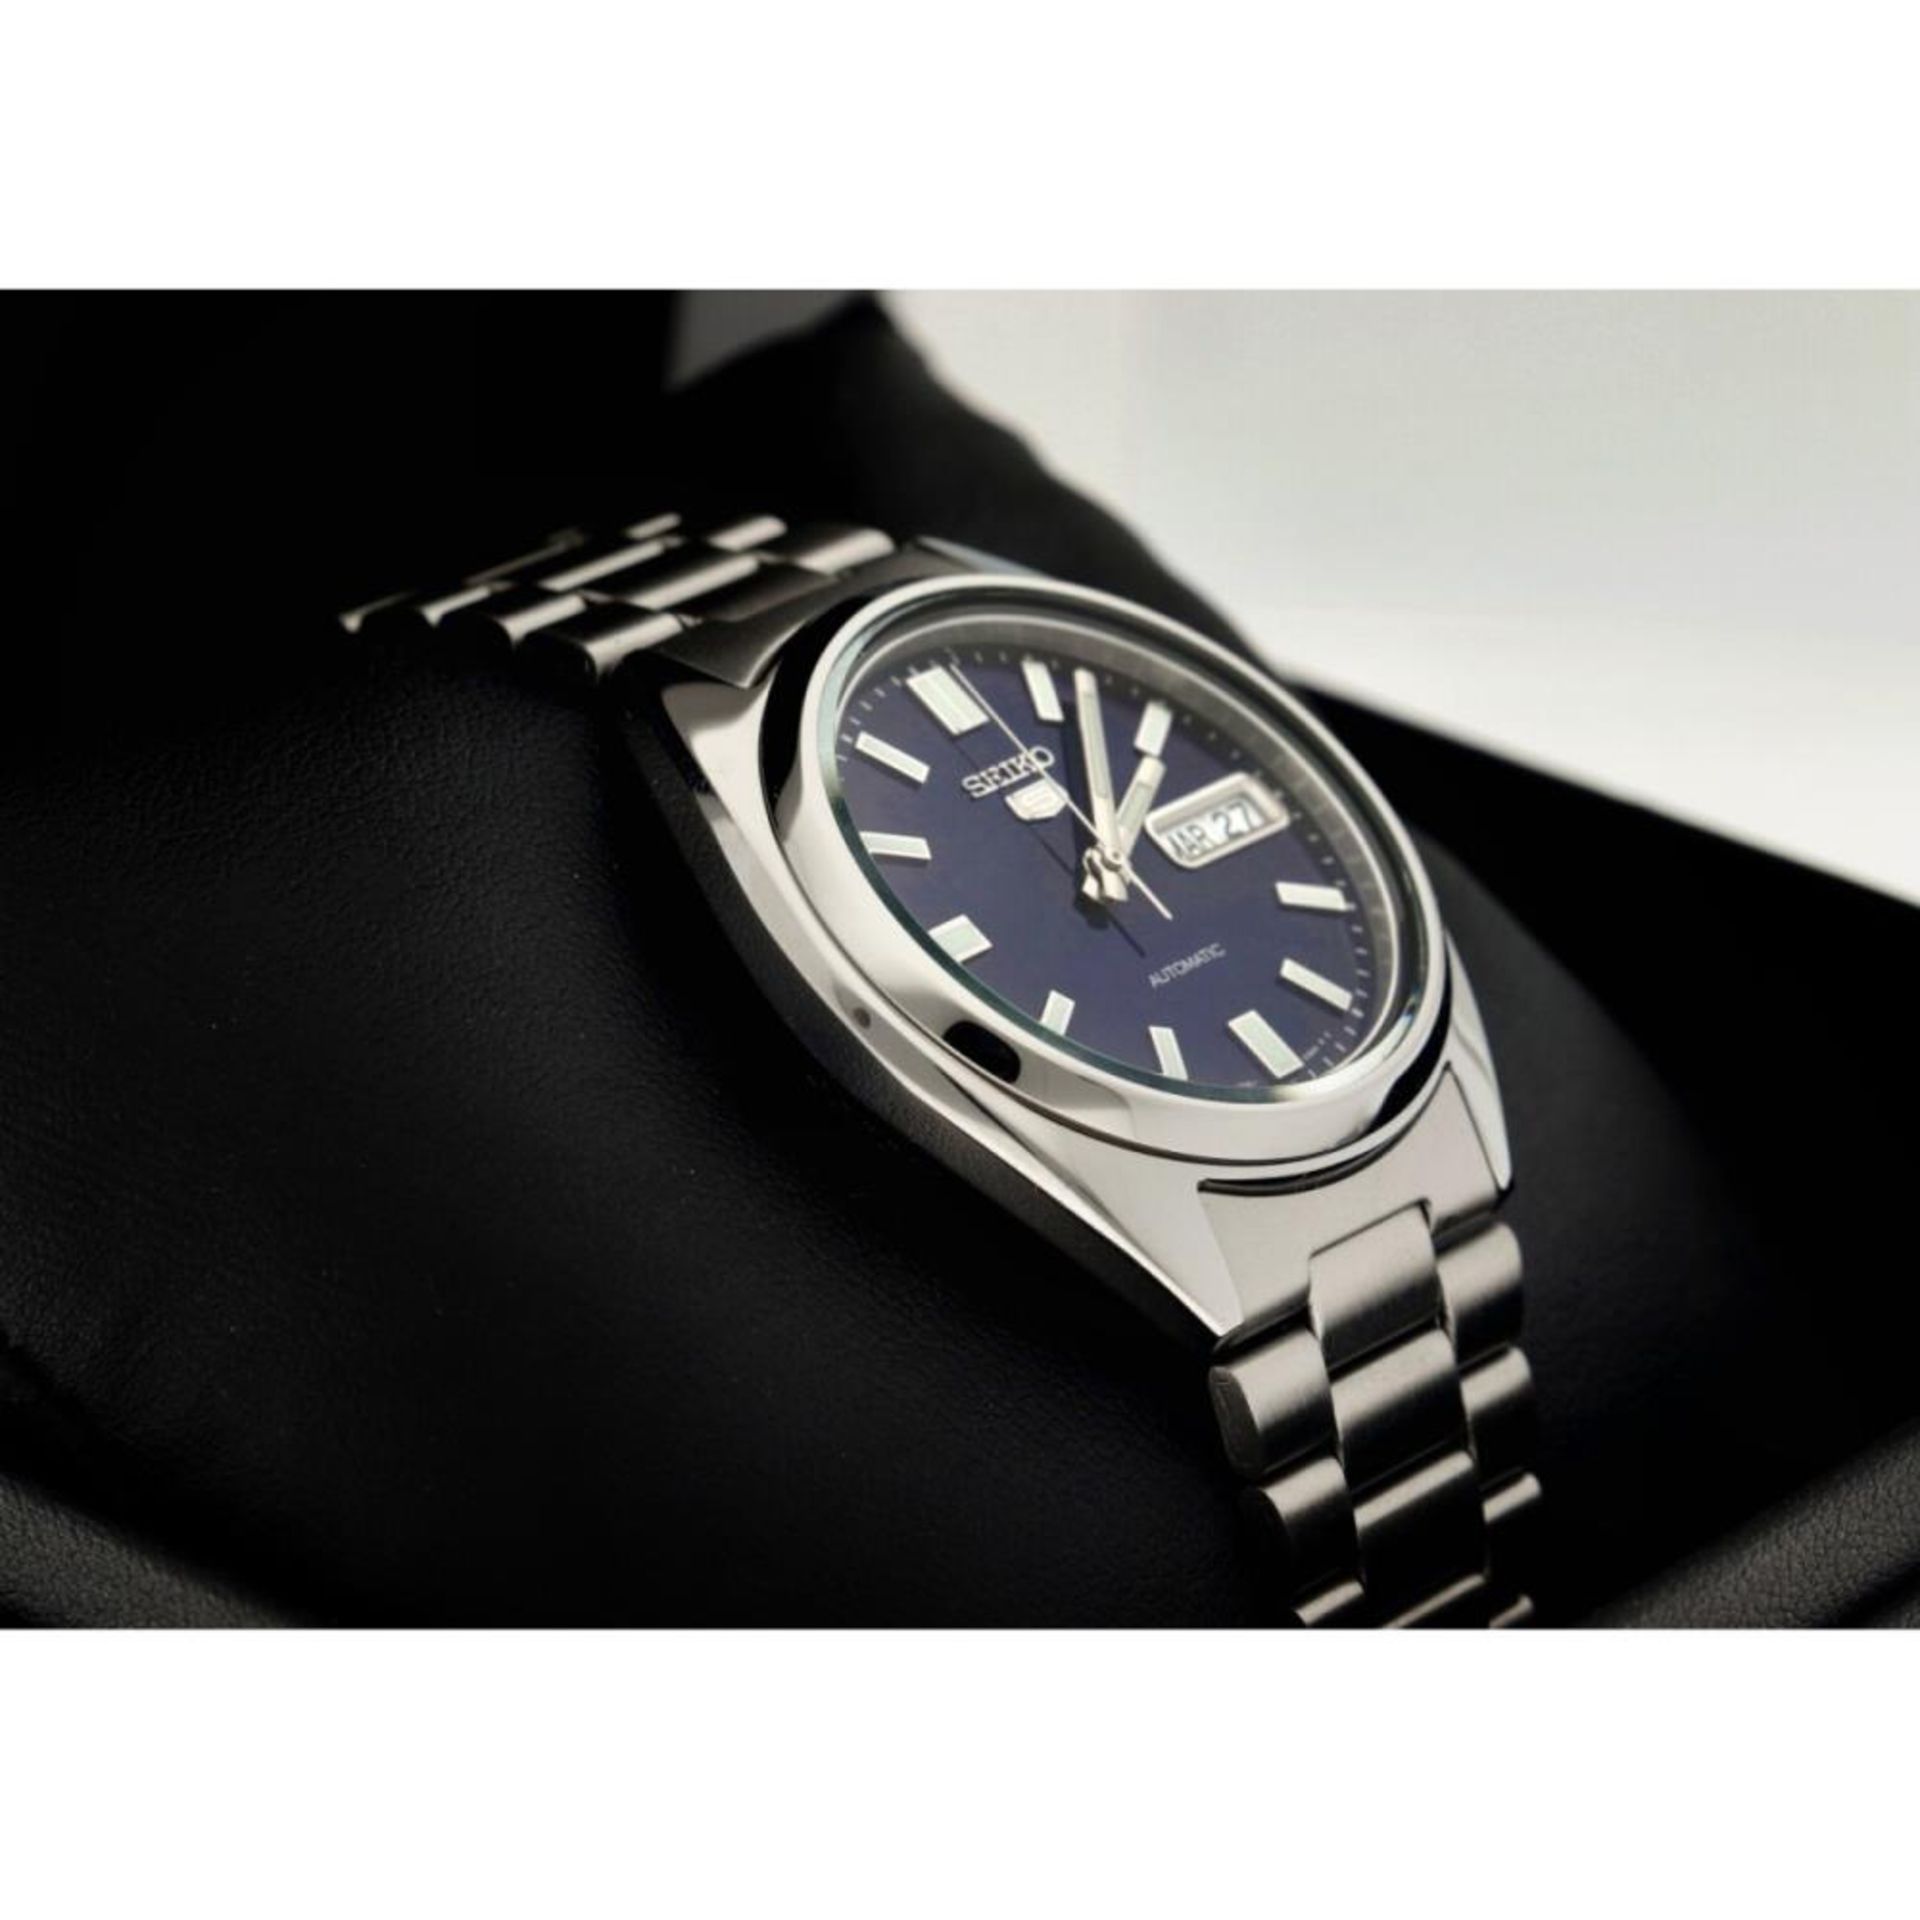 Seiko Day Date - unworn - 7S26-0480 - Men's watch - approx. 2015. - Image 8 of 11